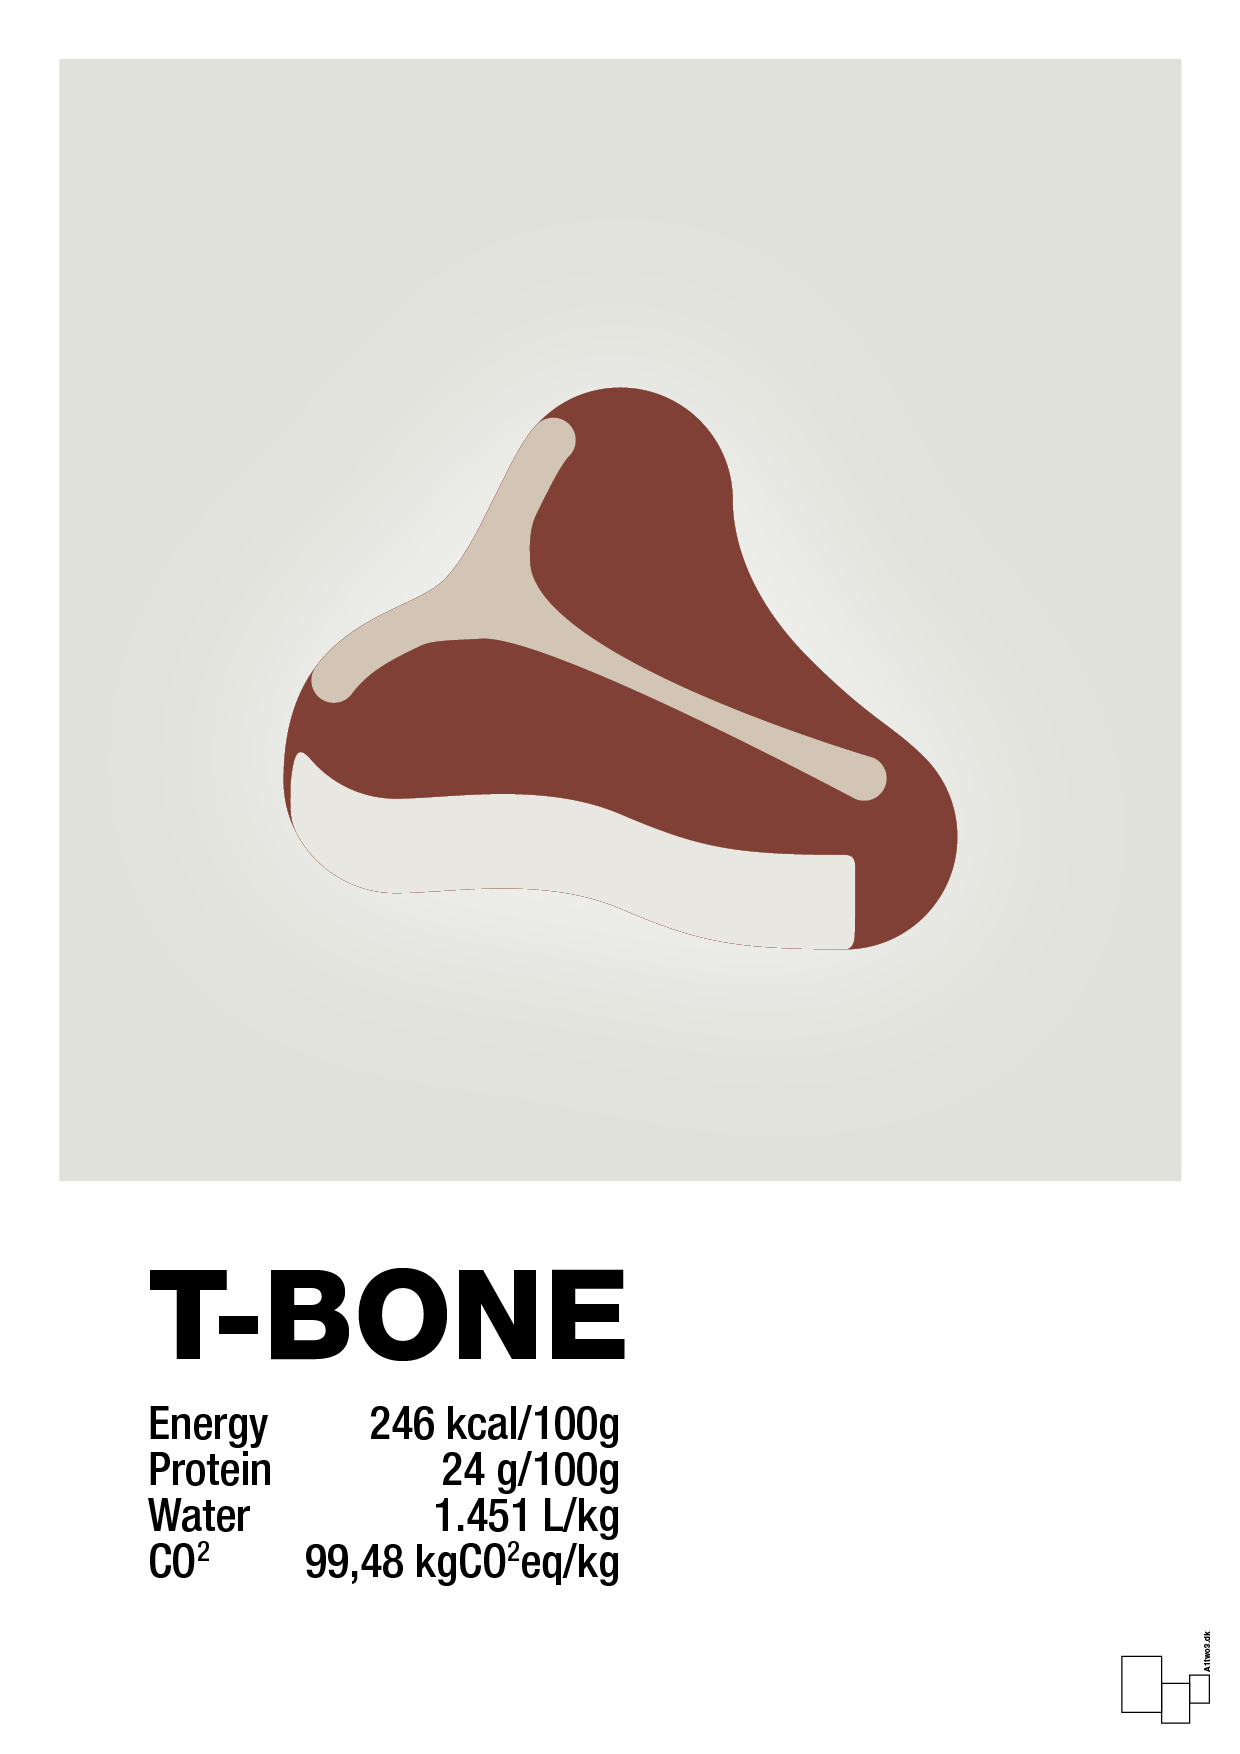 t-bone nutrition og miljø - Plakat med Mad & Drikke i Painters White